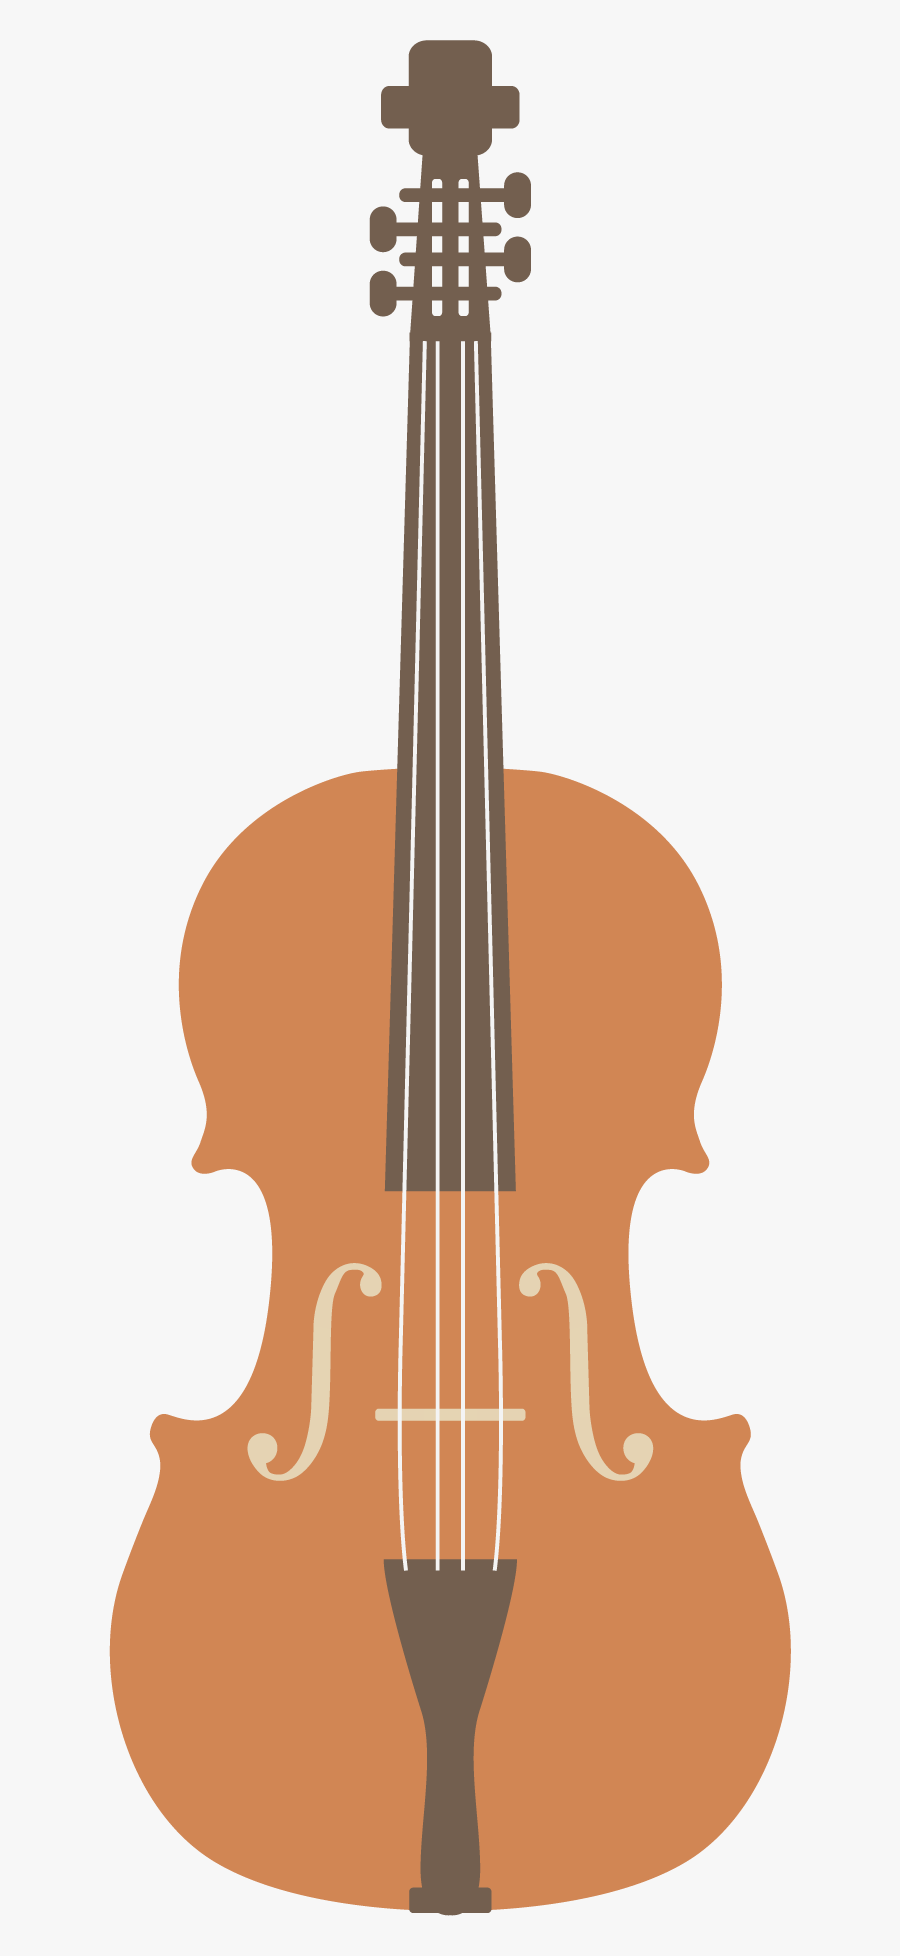 Violin Clipart Png Image - Tololoche, Transparent Clipart